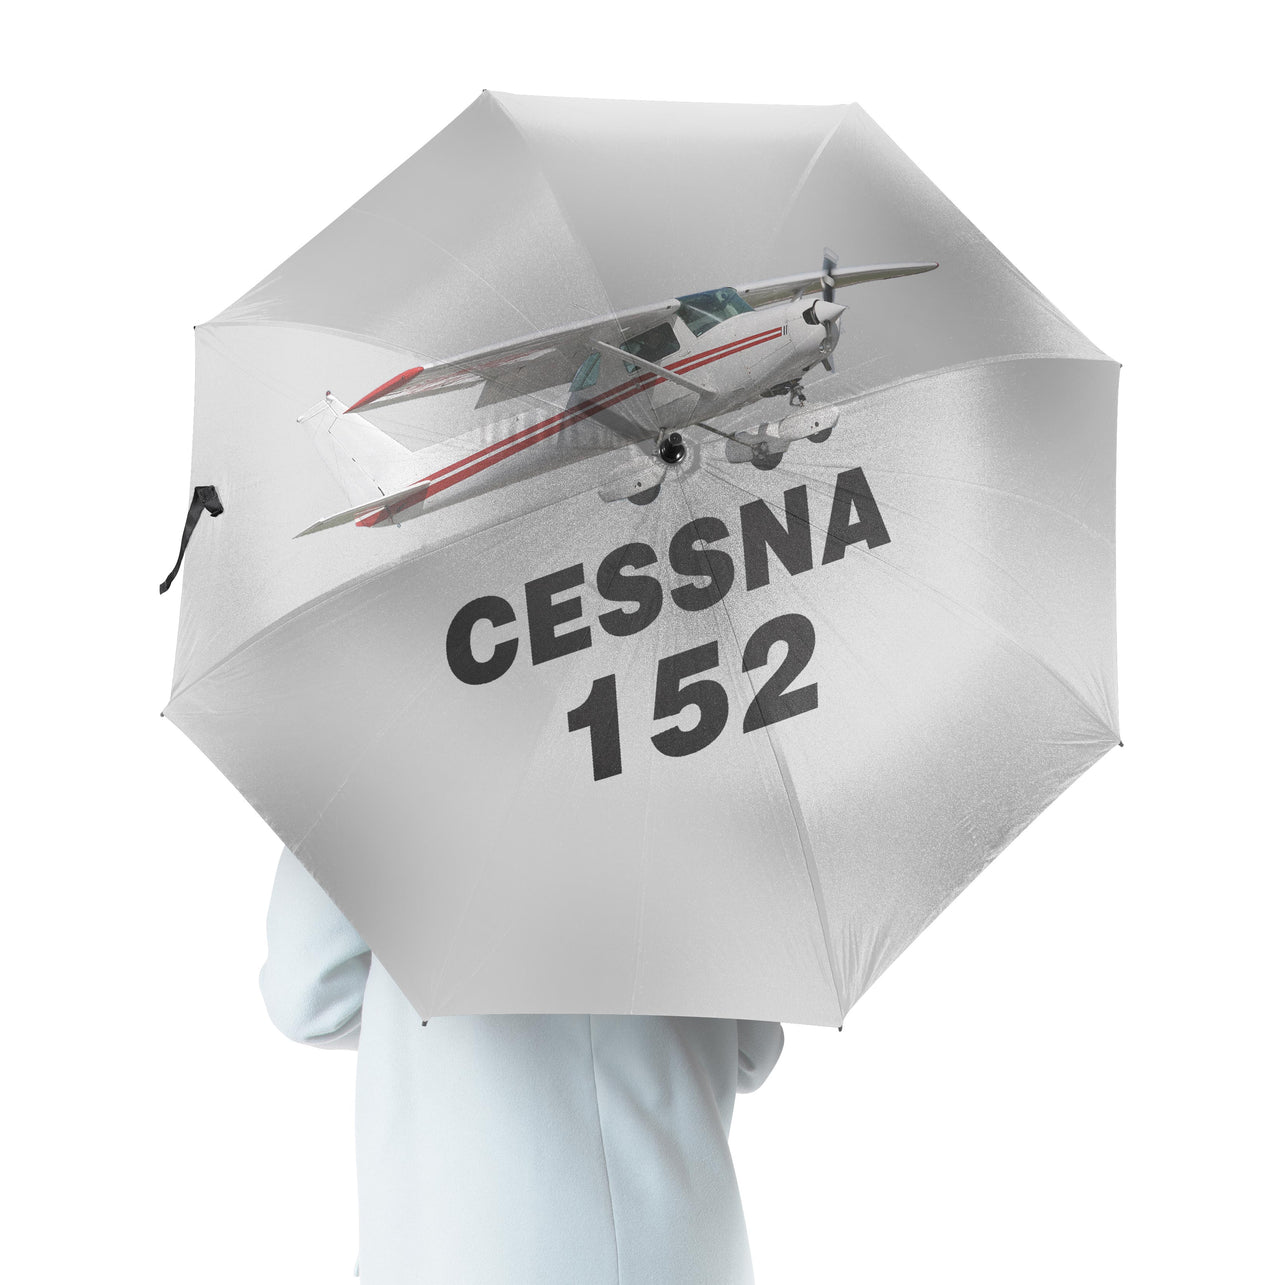 The Cessna 152 Designed Umbrella